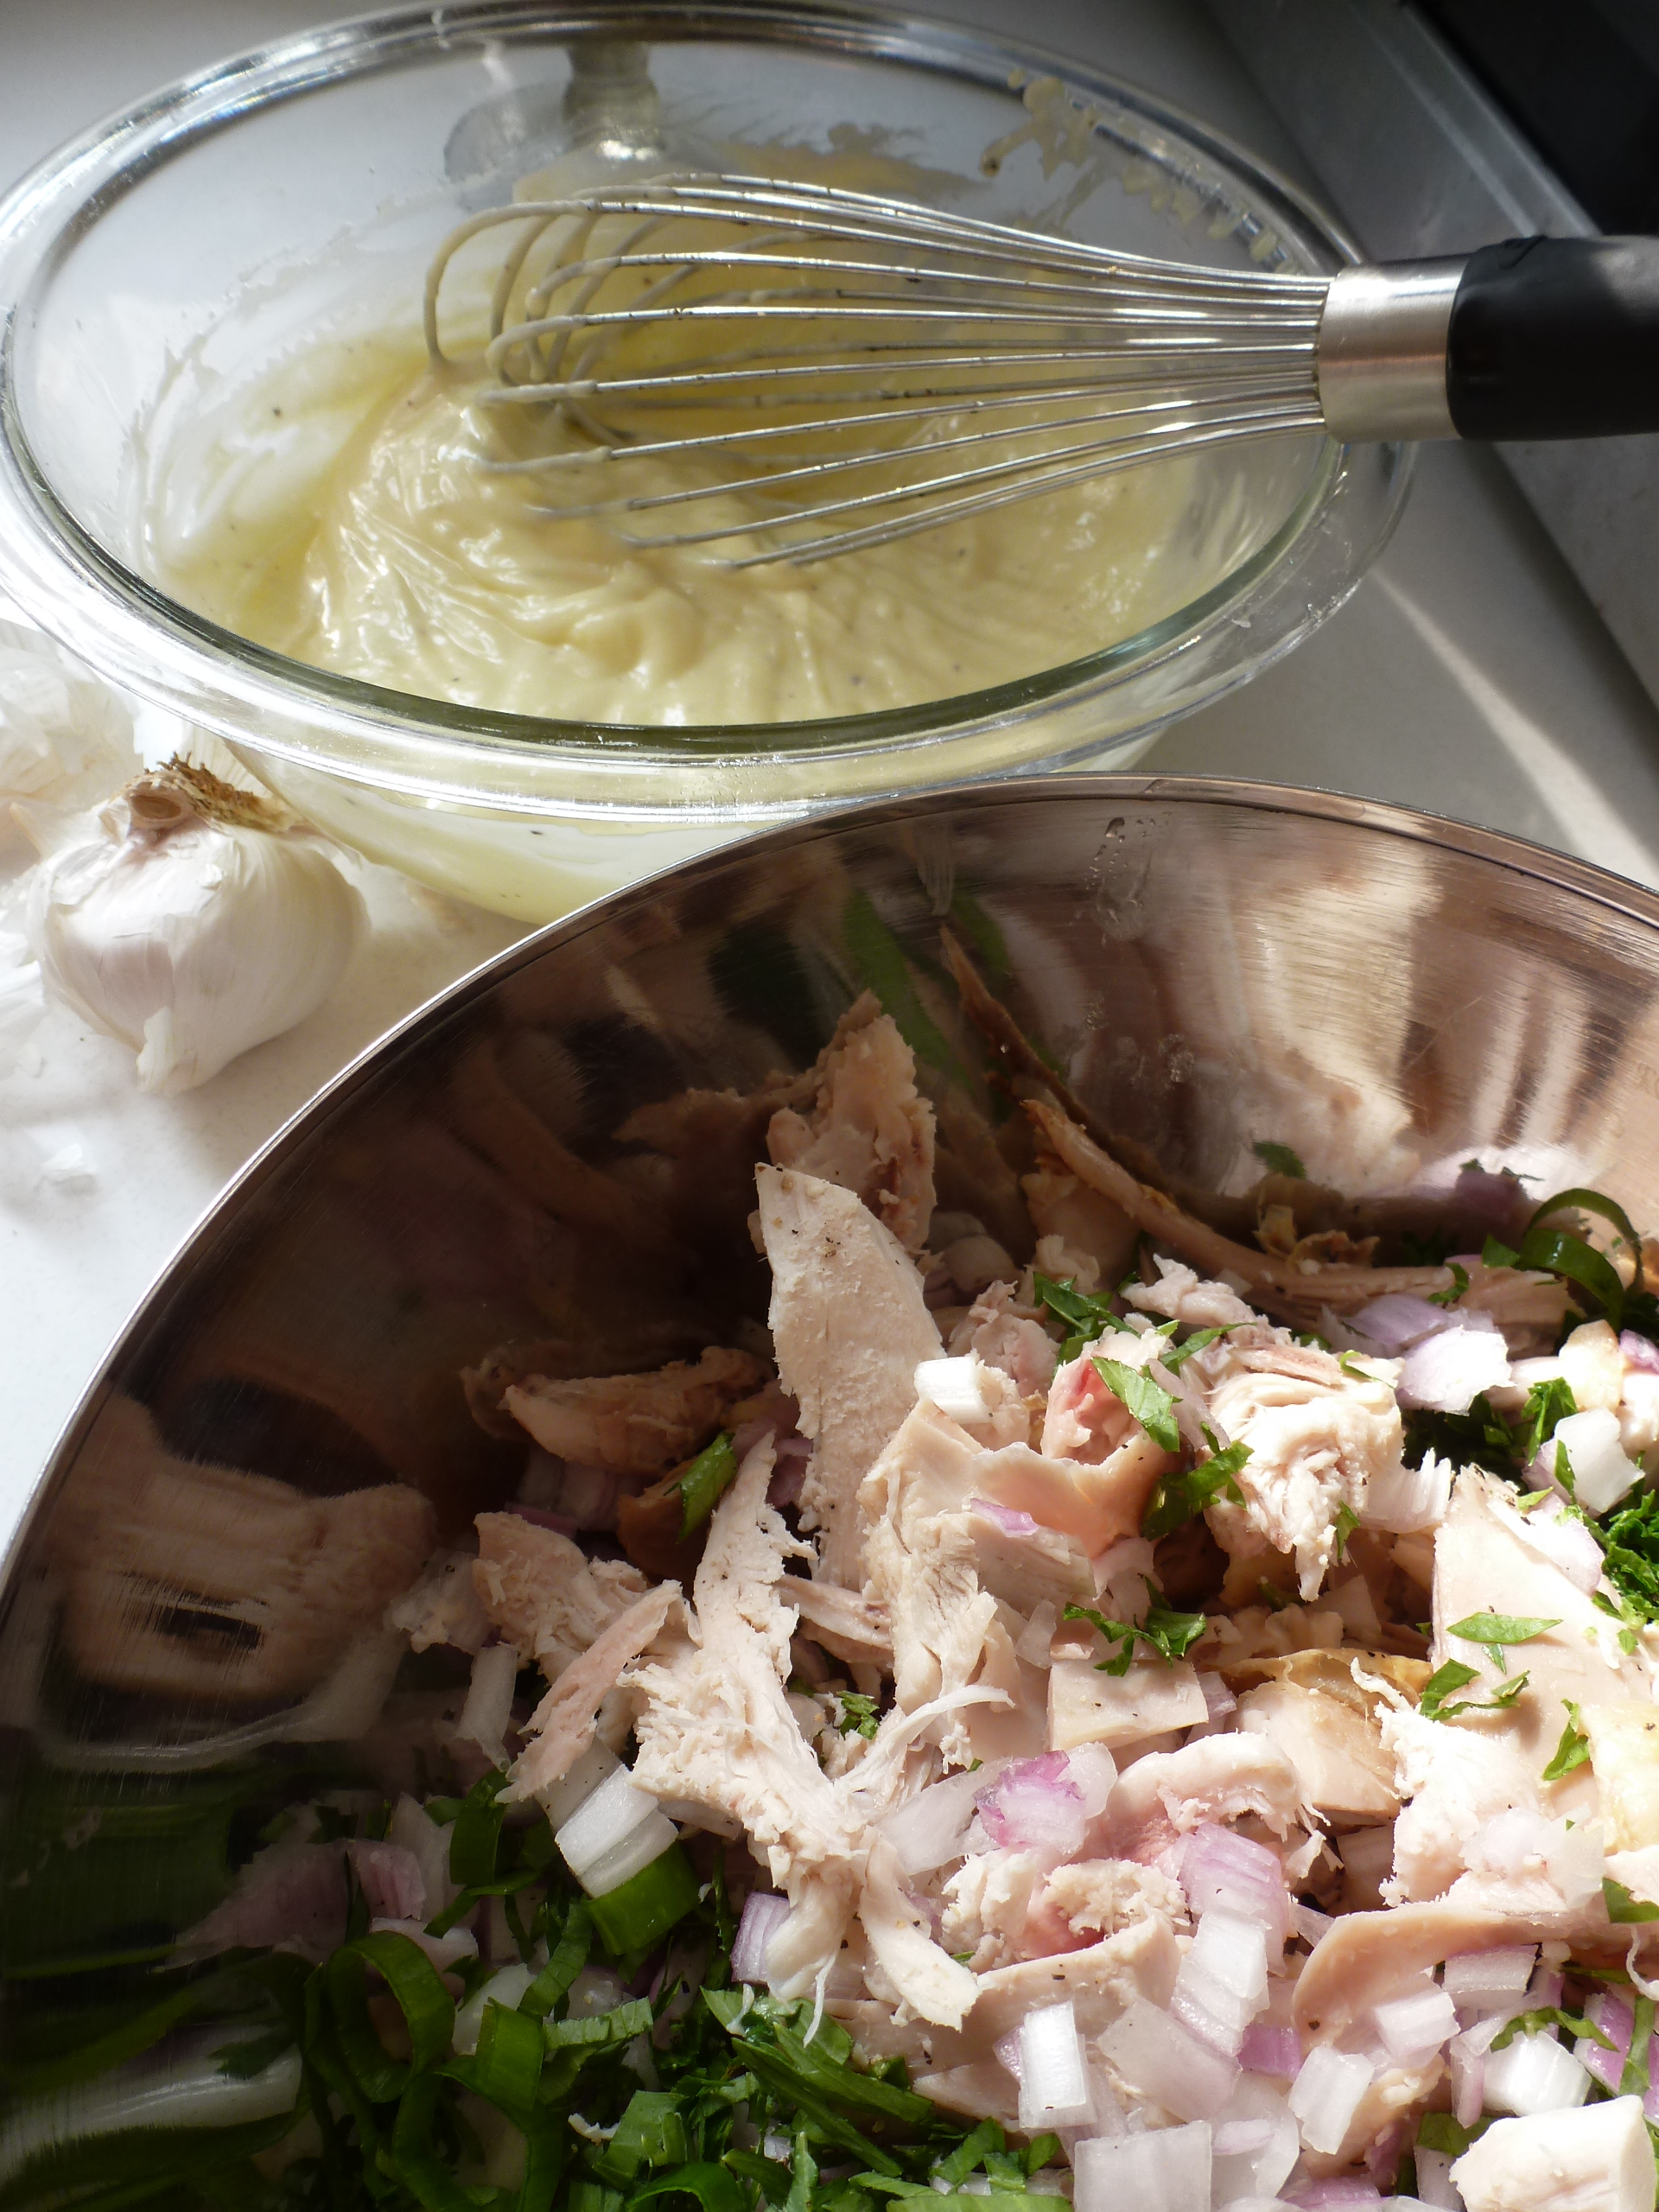 Making the chicken salad